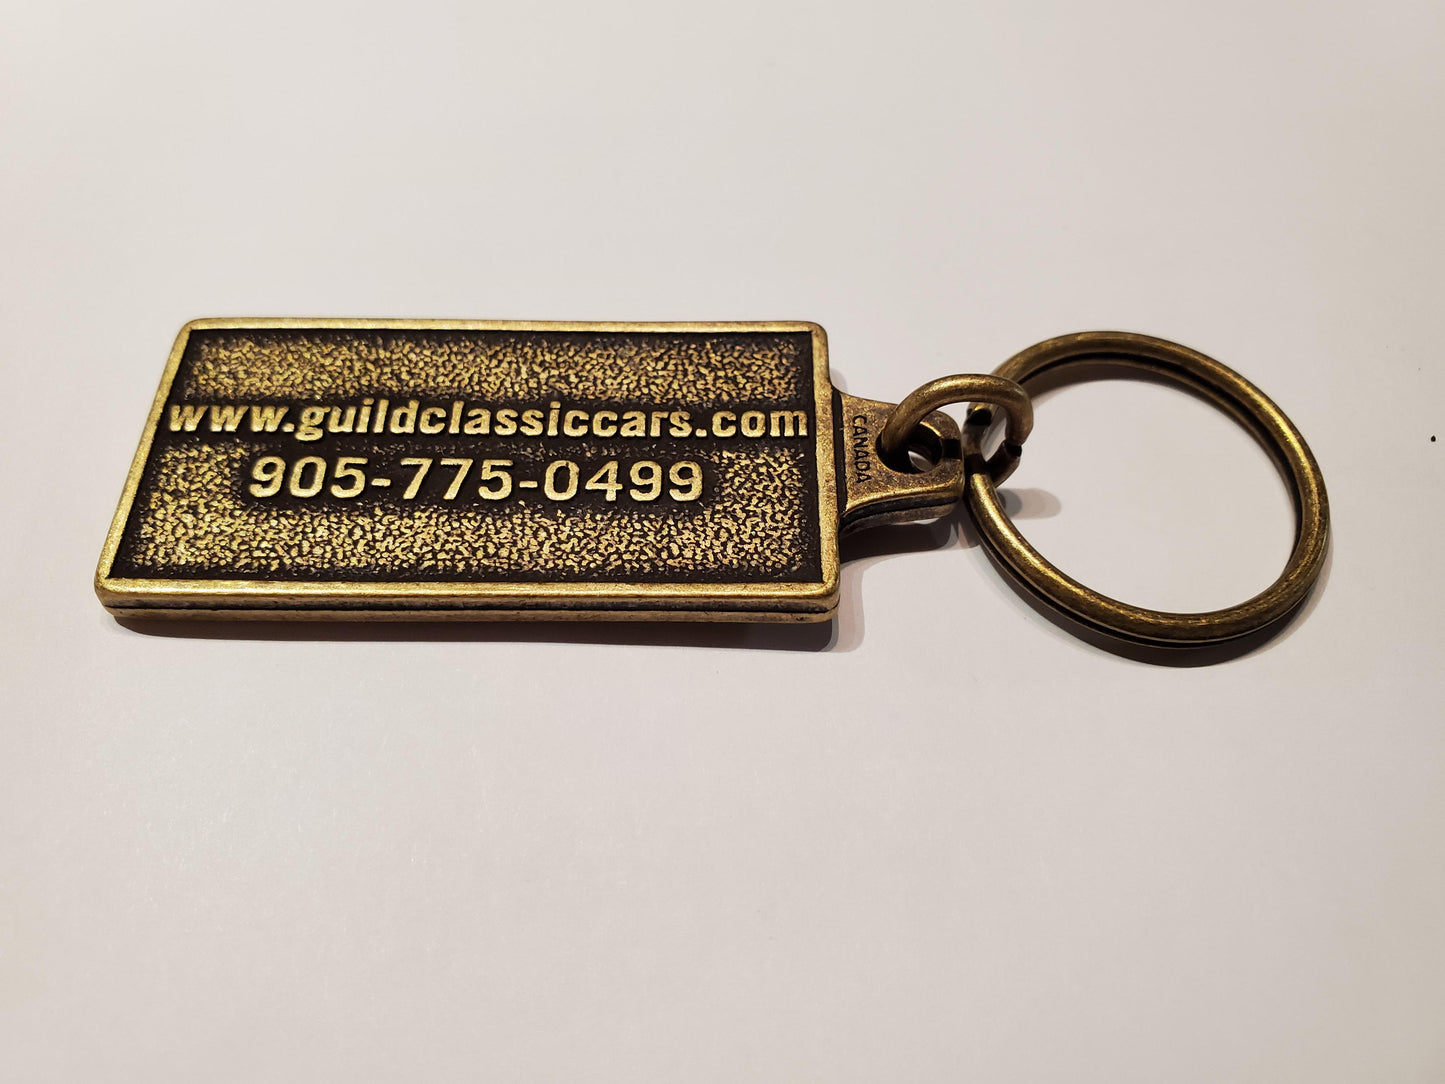 Guild Logo Antique Brass Key Chain